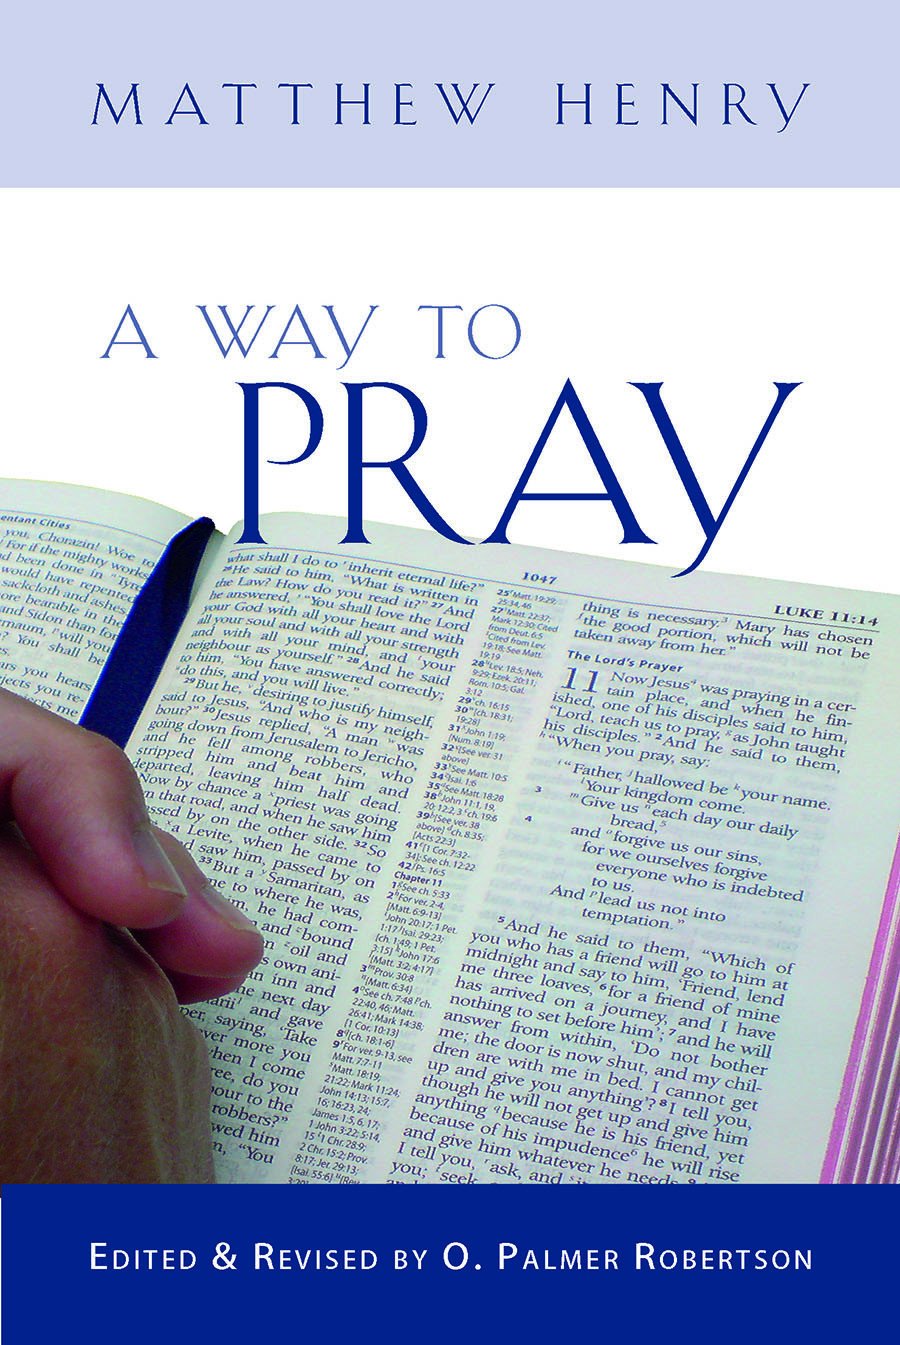 A Way to pray